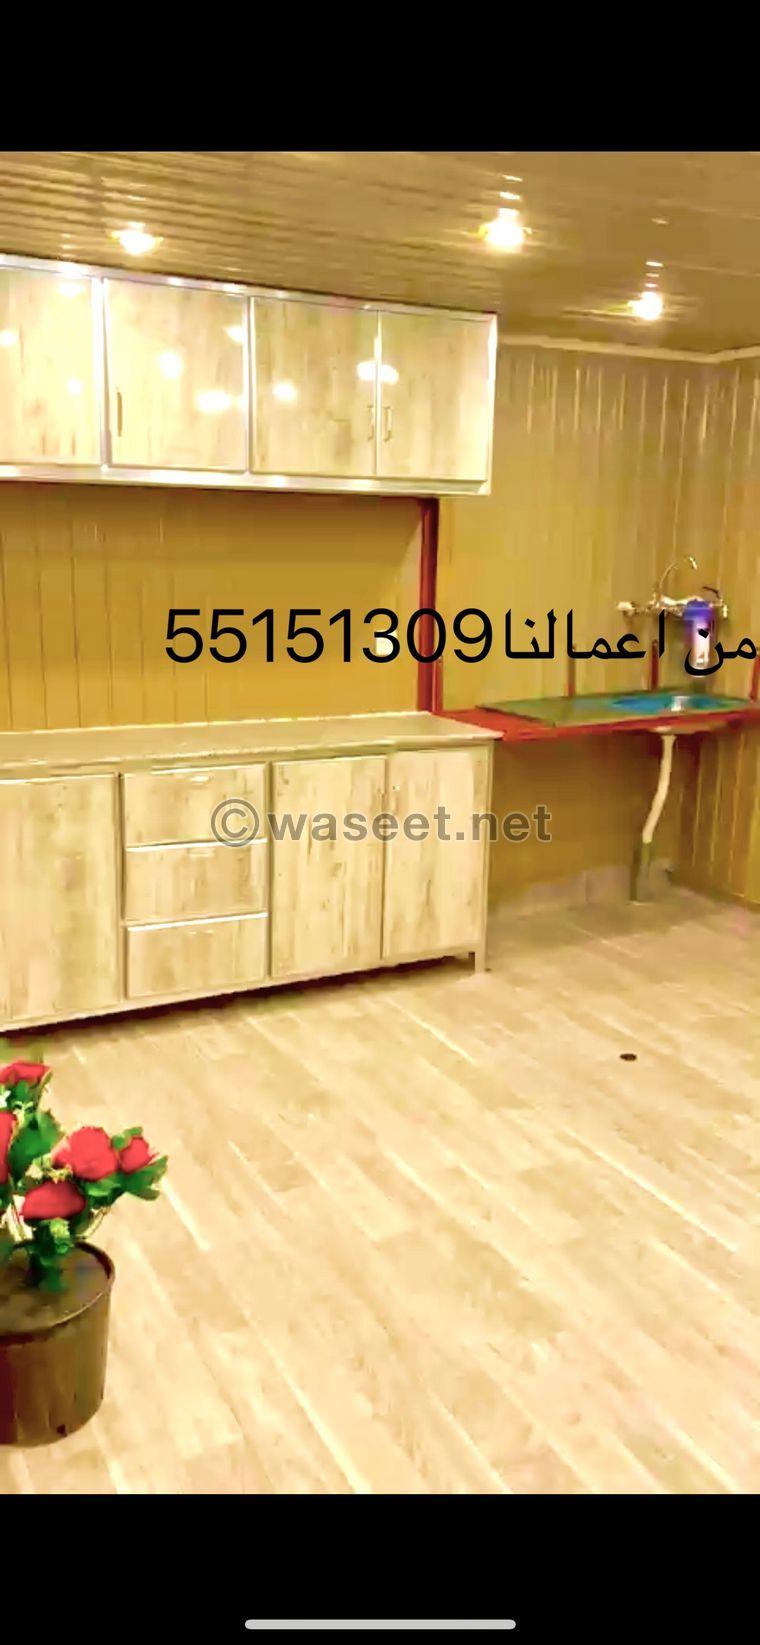 For sale, kitchen, toilets, Kuwaiti management 5